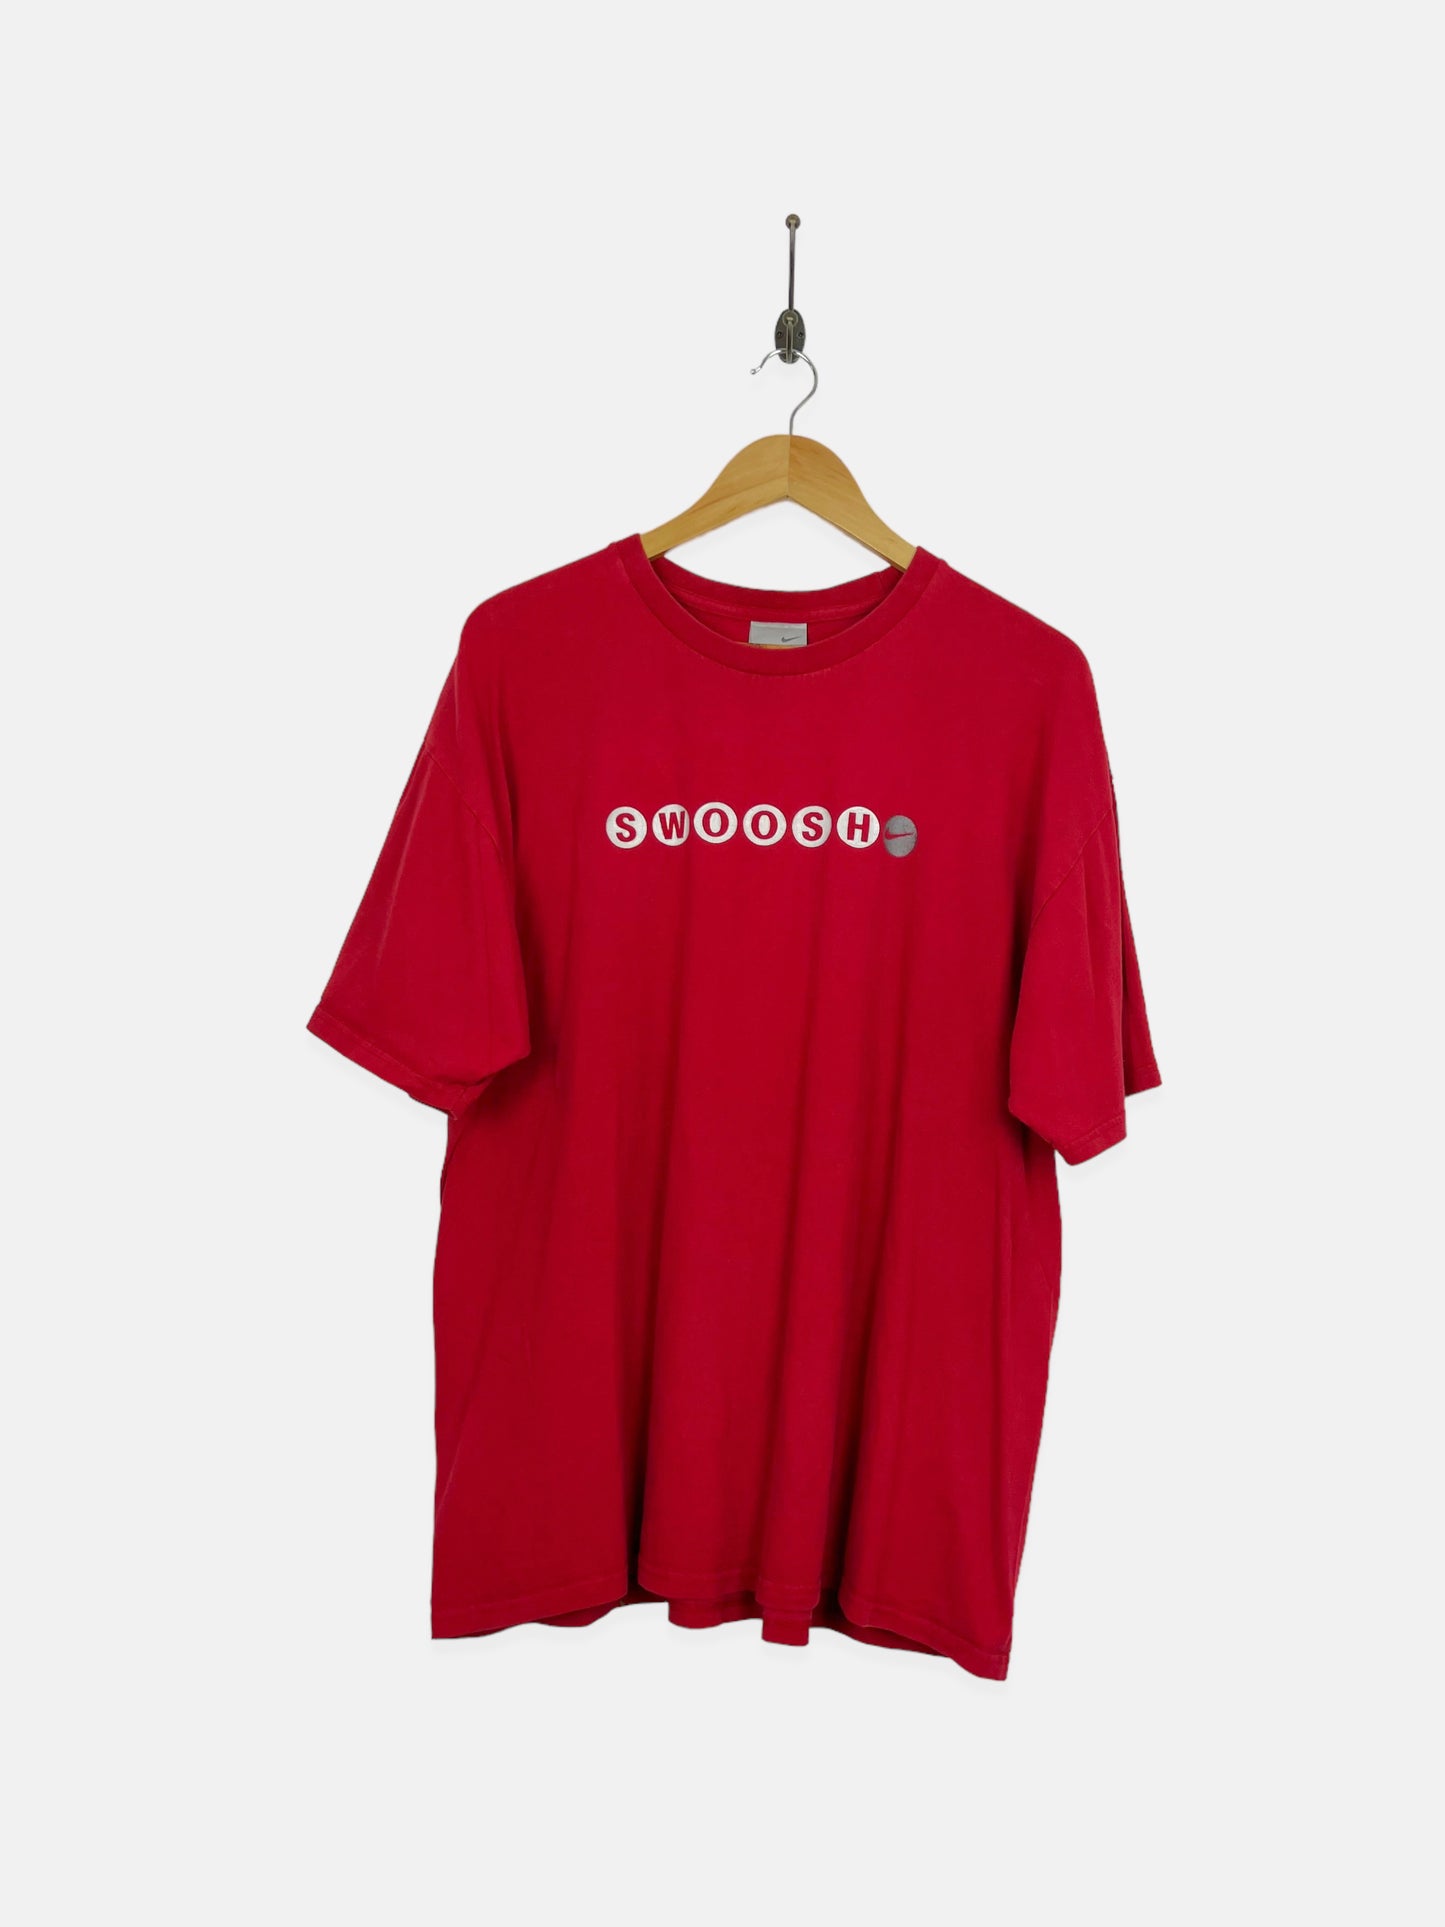 90's Nike Swoosh Vintage T-Shirt Size XL